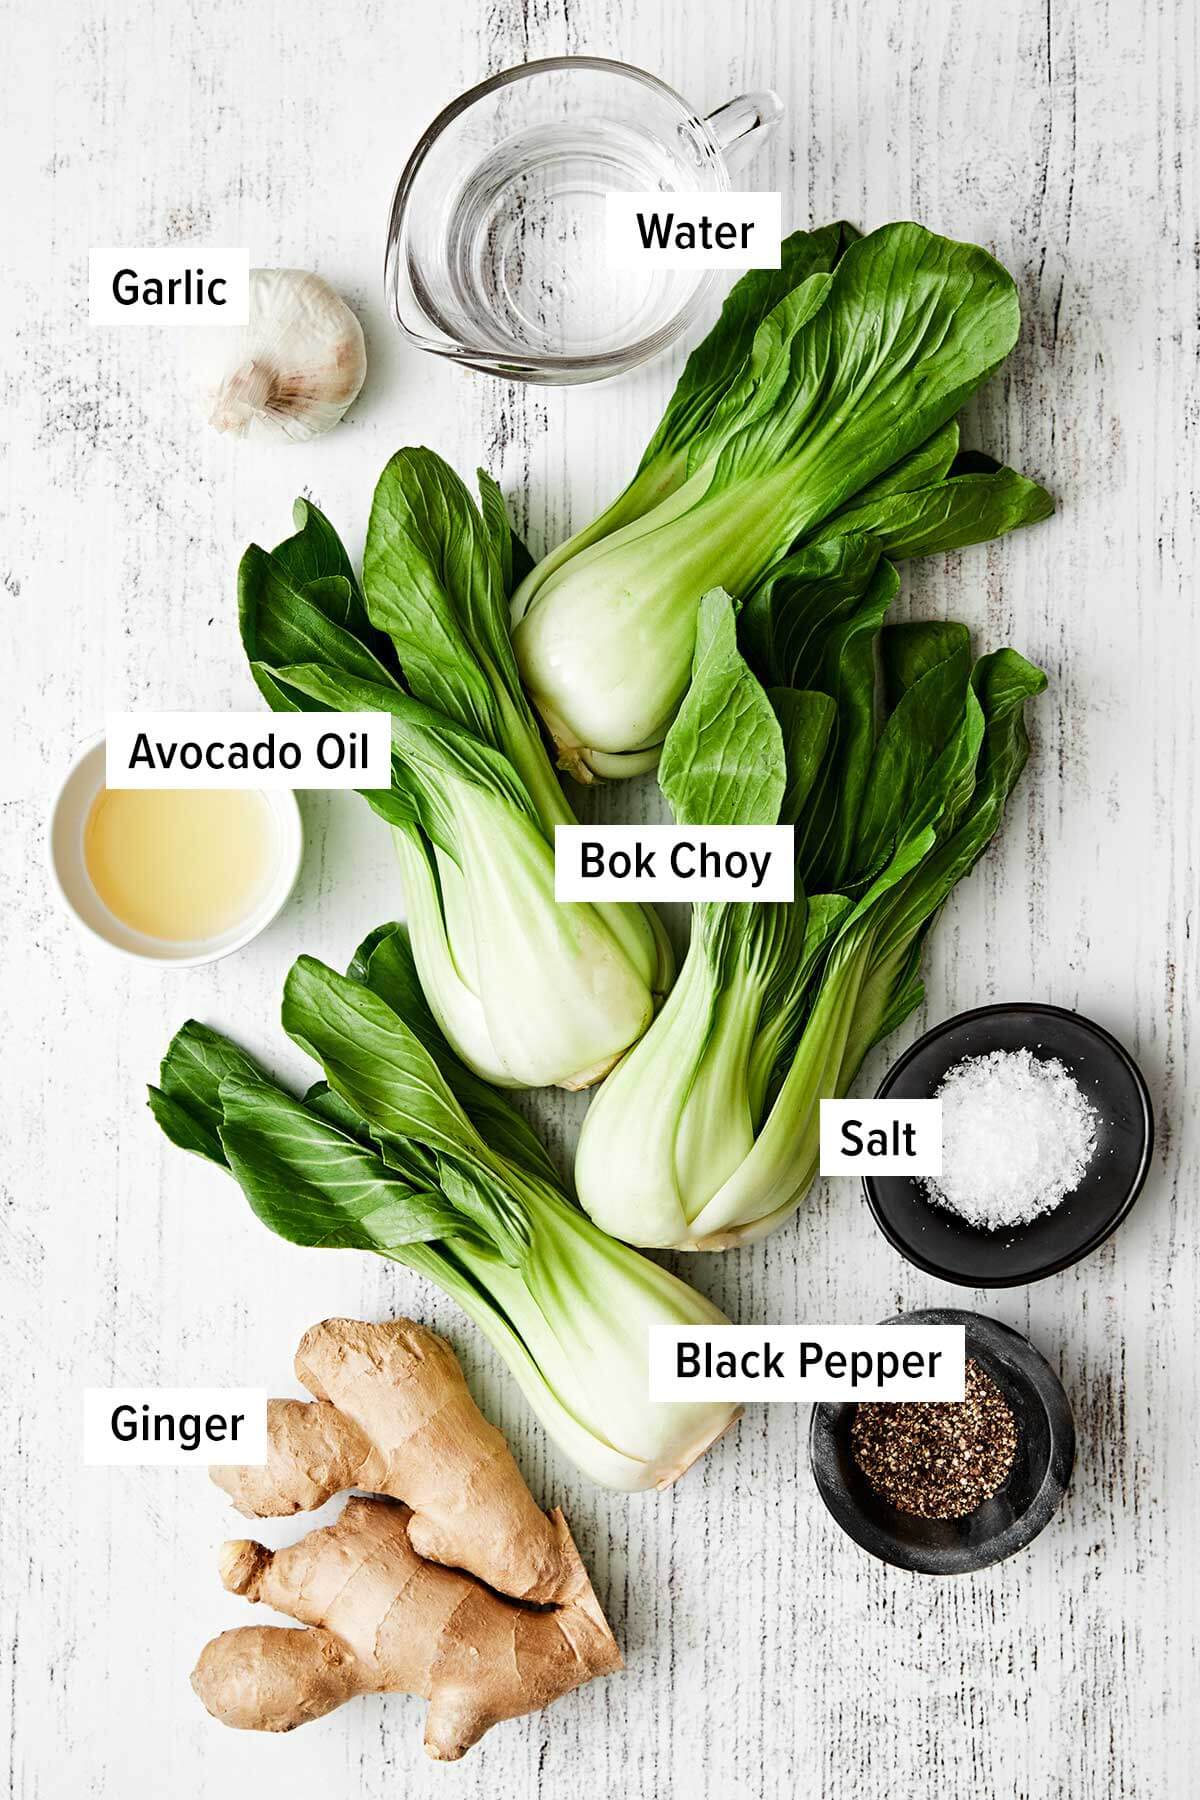 Ingredients to stir-fry bok choy.